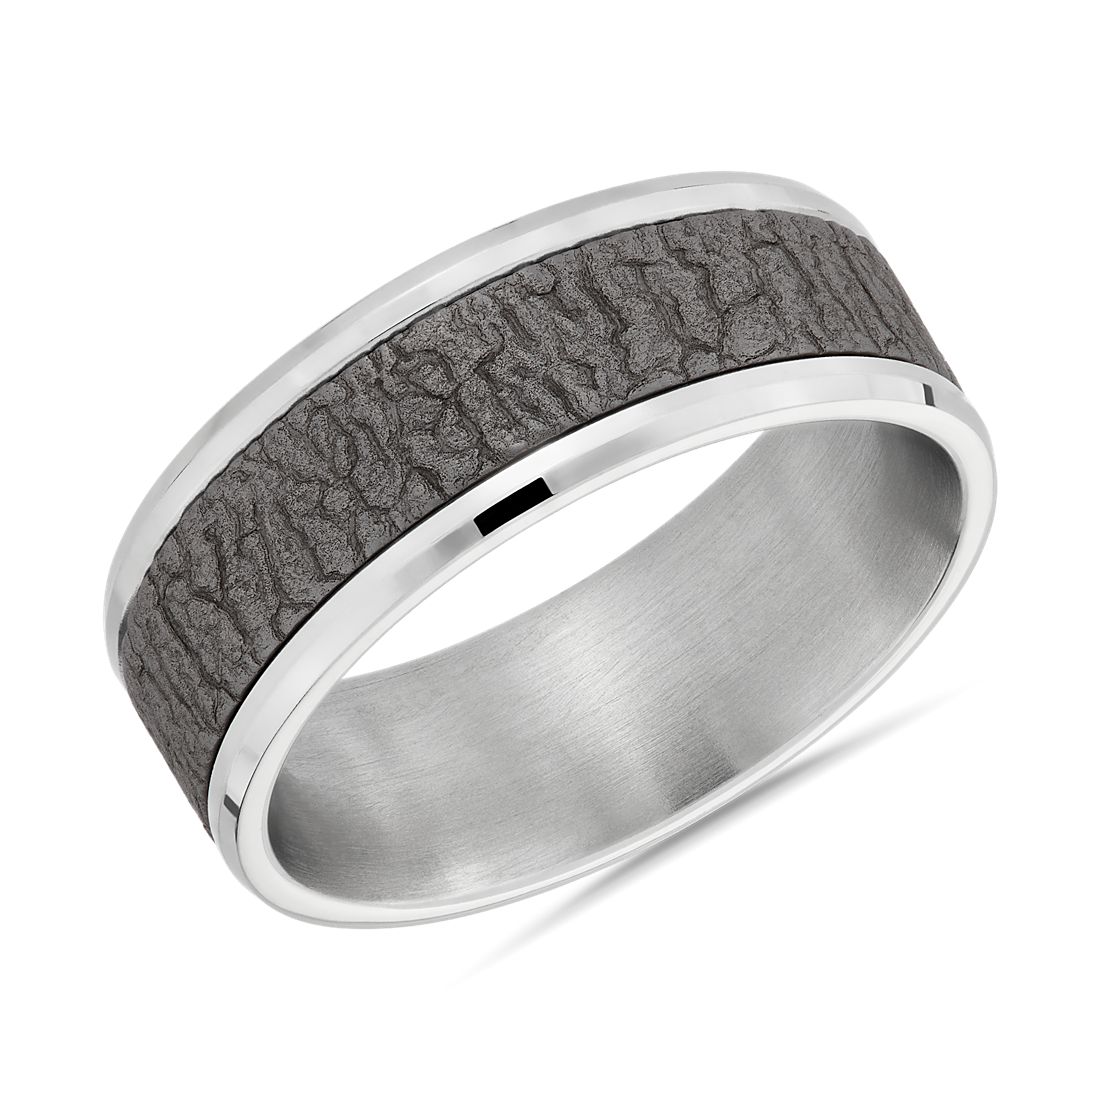 Bark Inlay Wedding Ring in 14k White Gold and Grey Tantalum (8 mm)